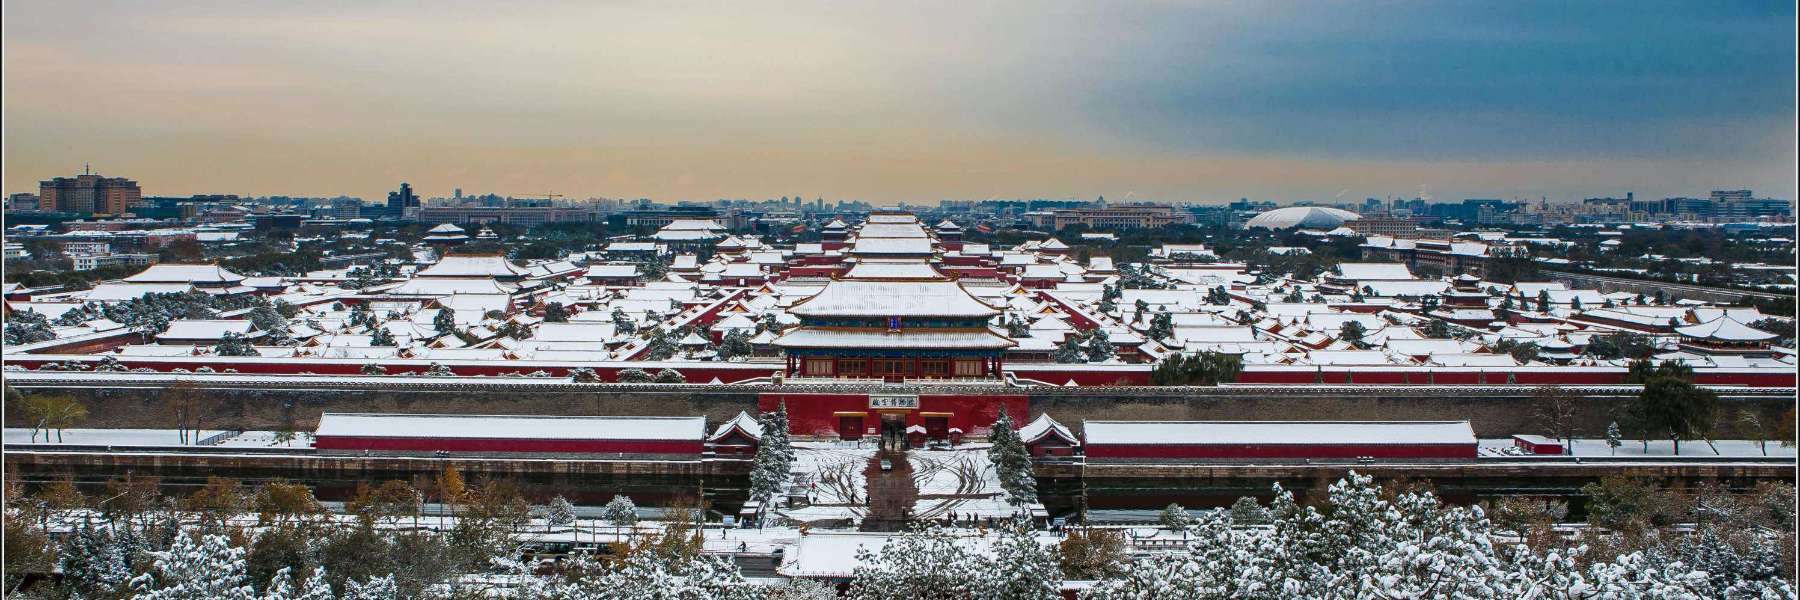 Forbidden City Tour